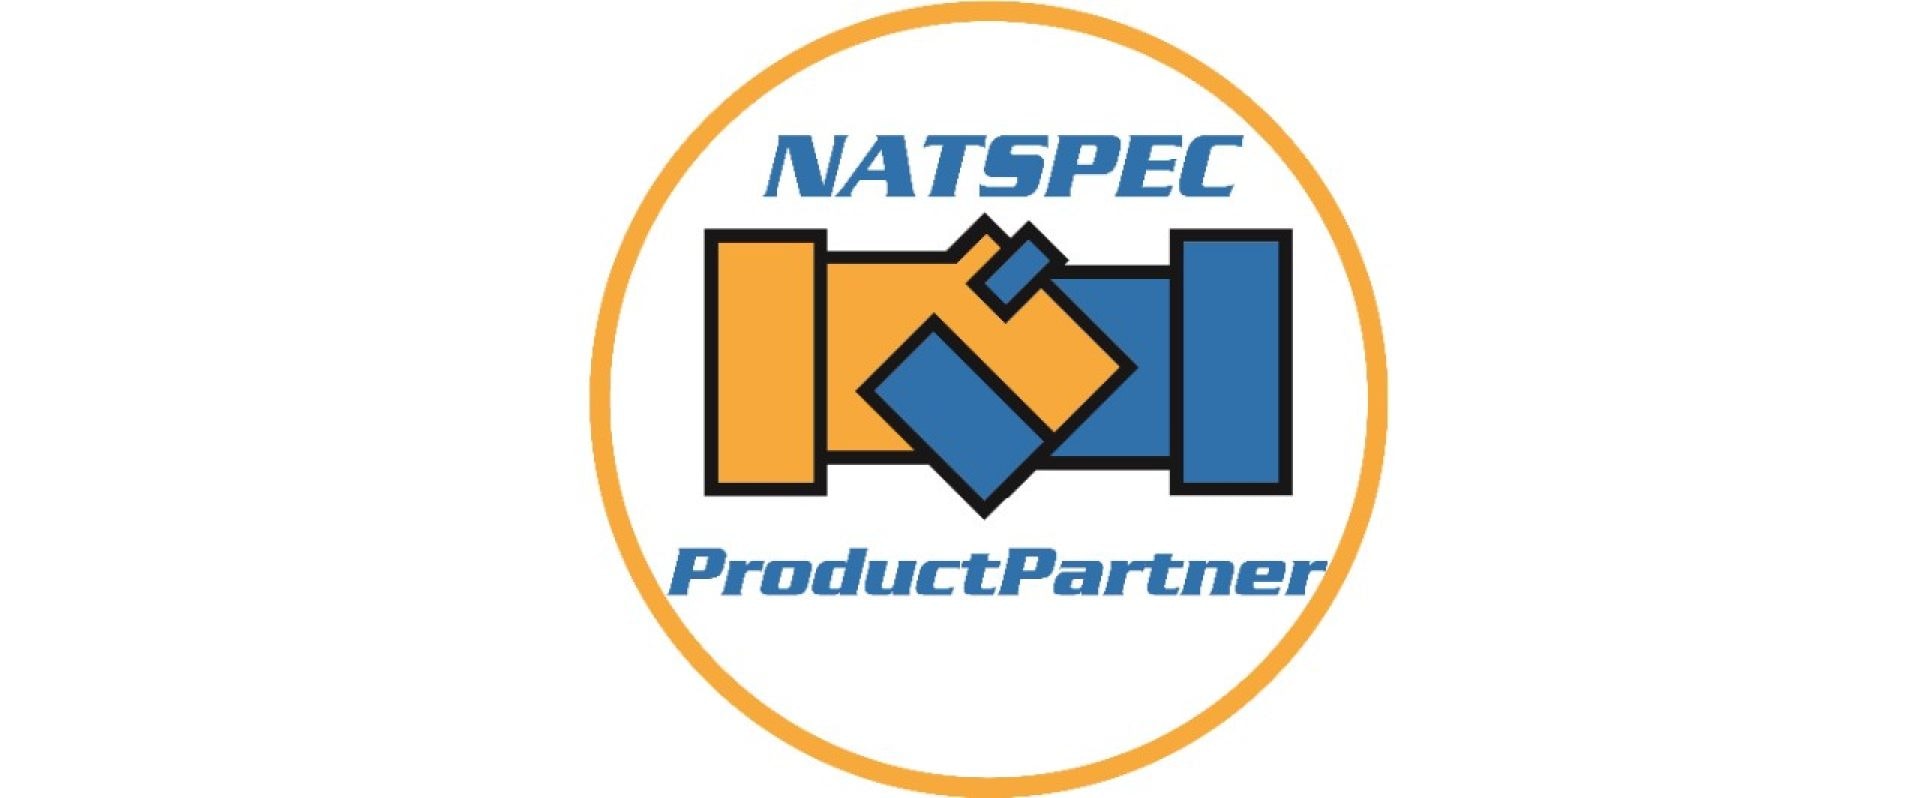 NATSPEC Product Partner logo